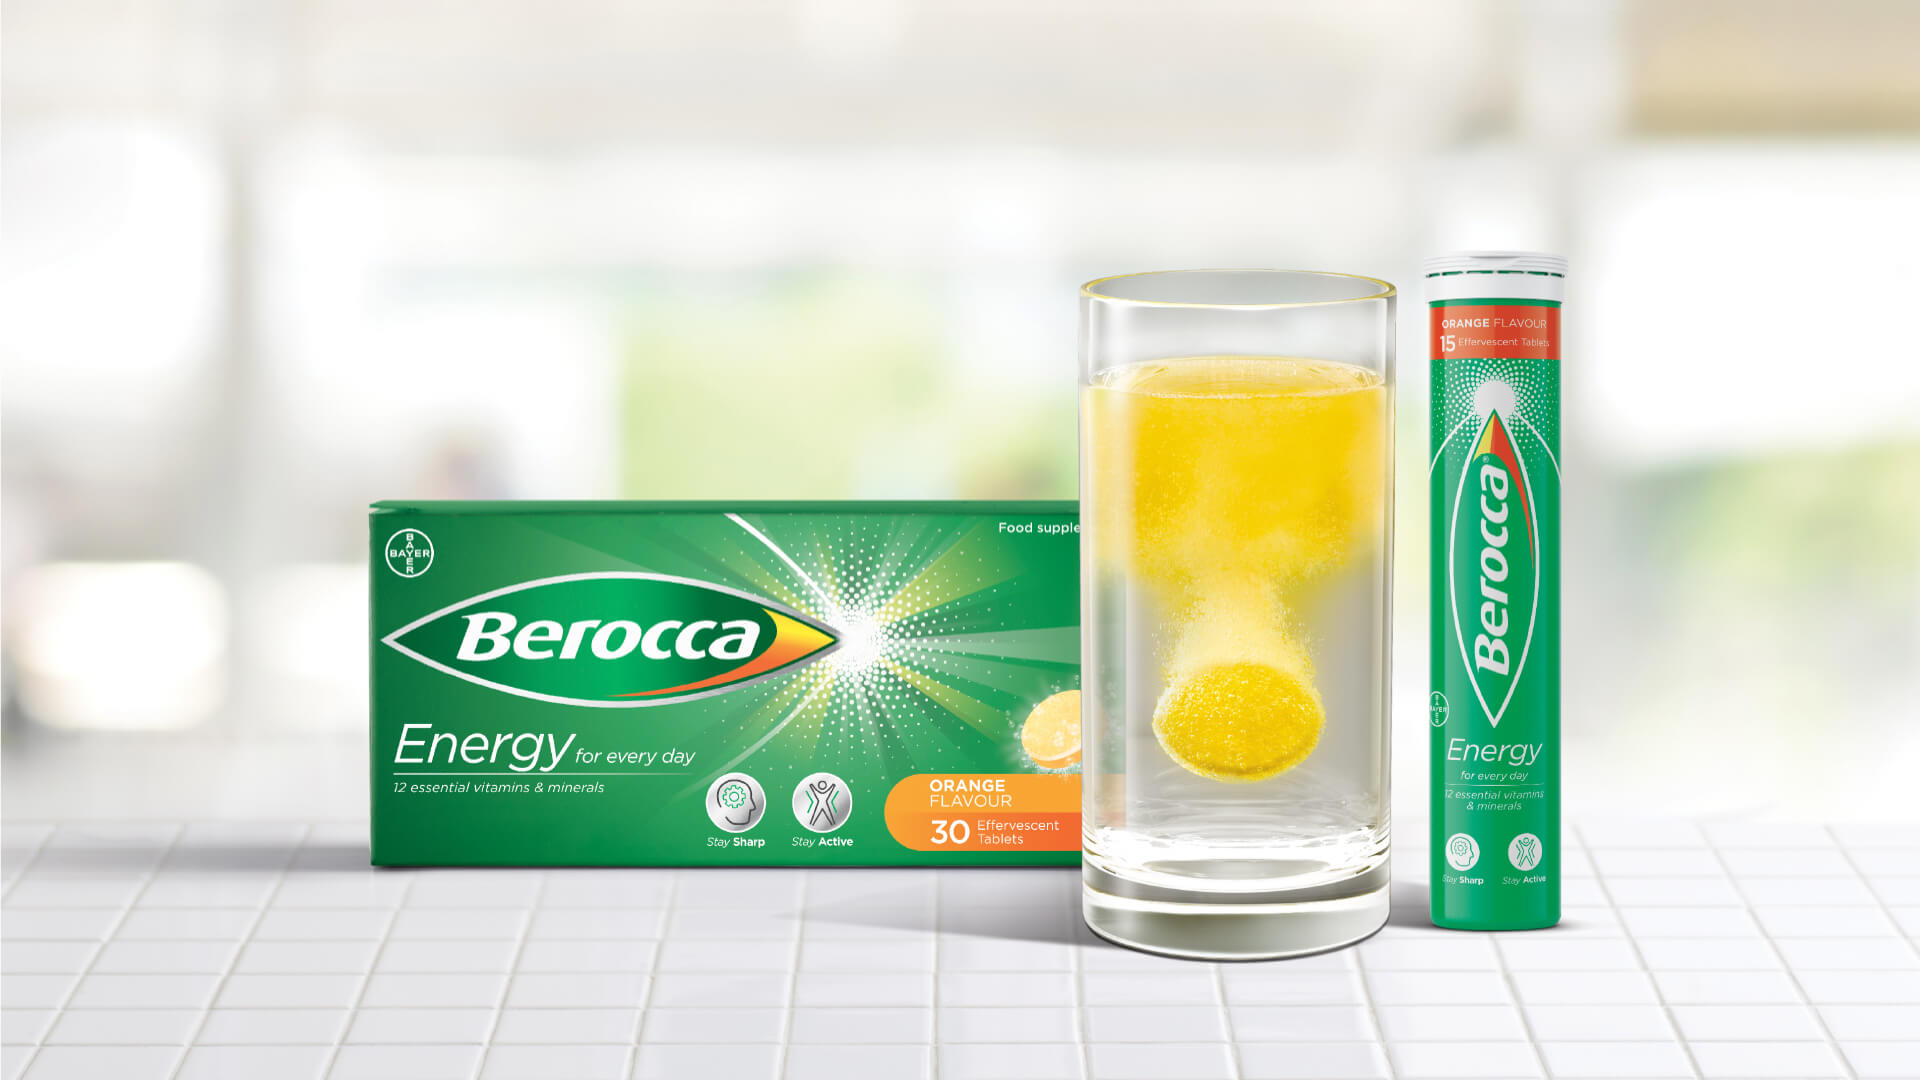 Berocca brand identity packaging